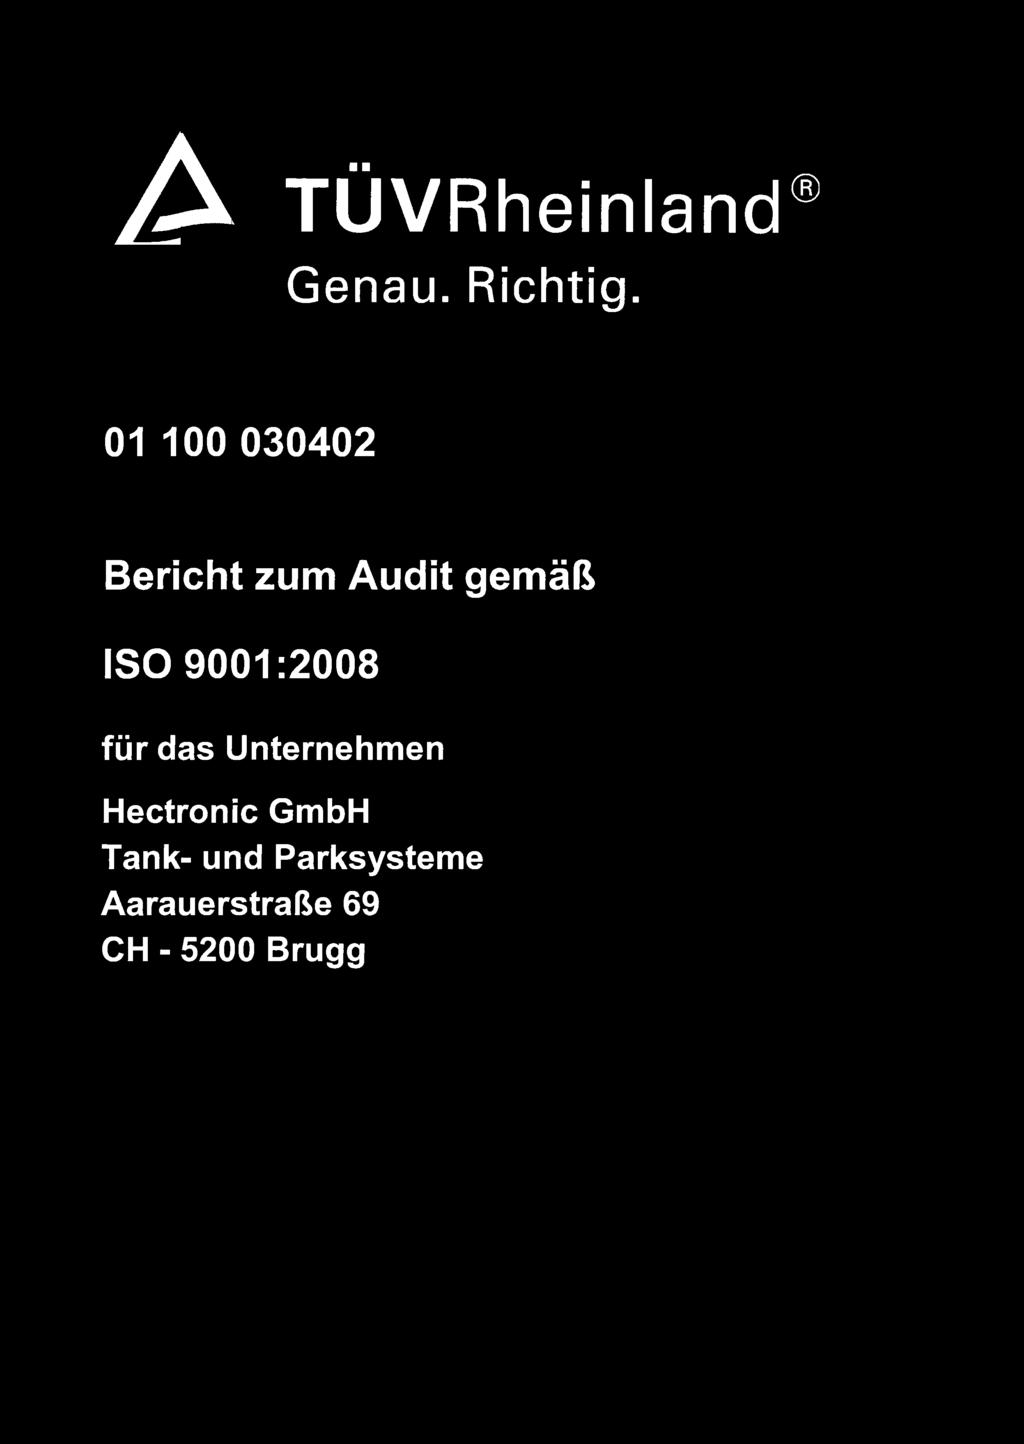 Jk TÜVRheinland 01 100 030402 Bericht zum Audit gemäß ISO